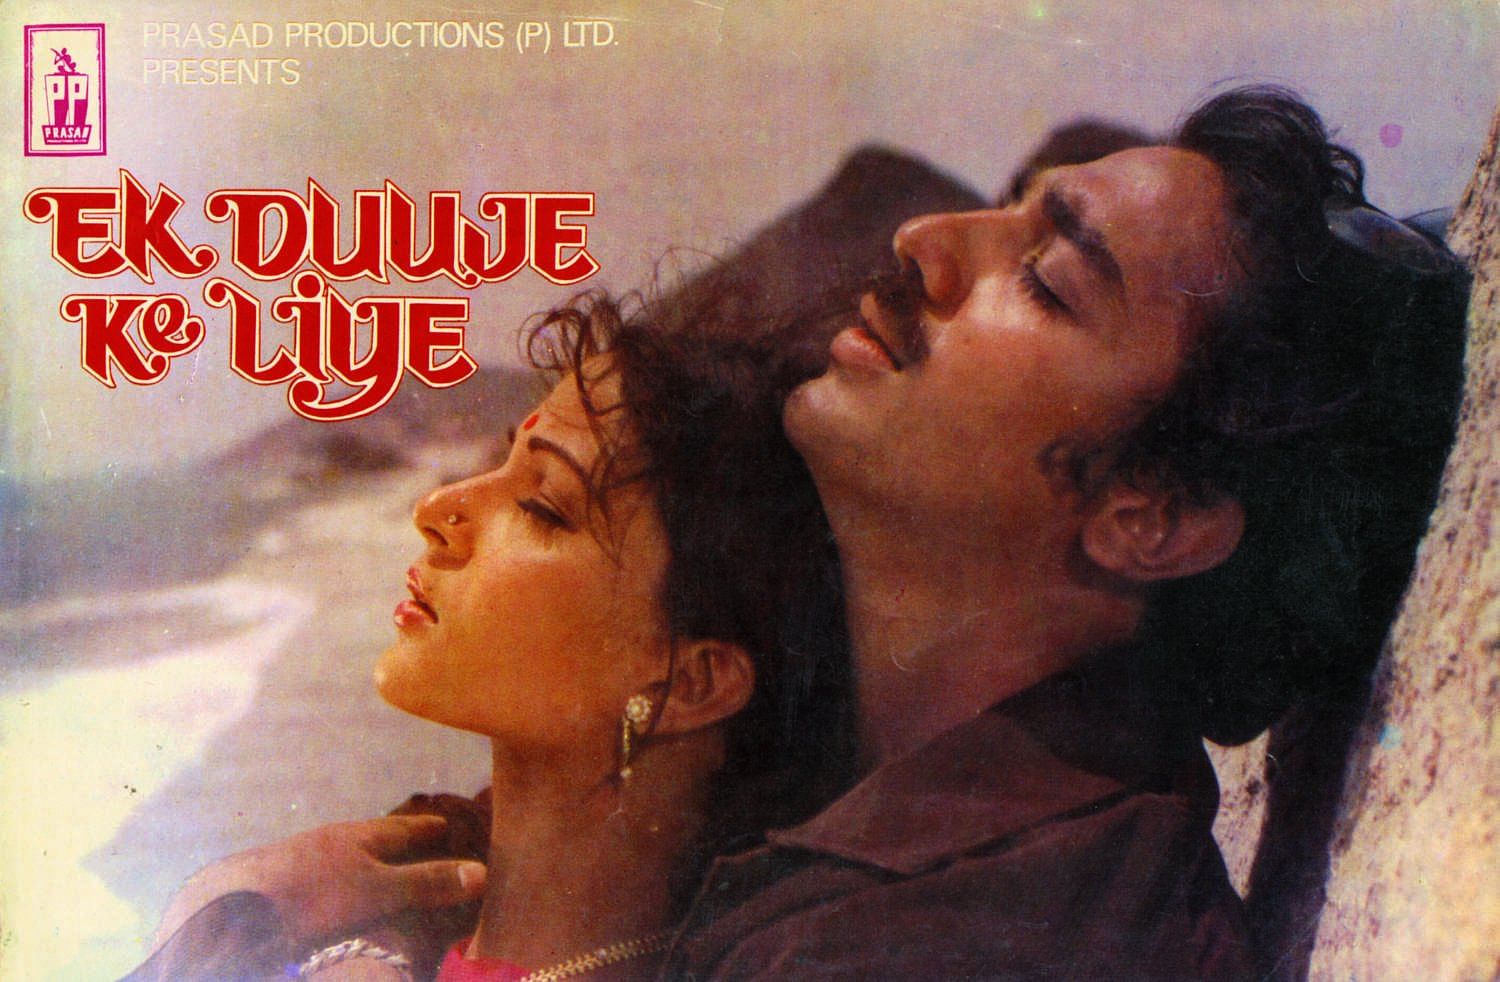  Ek Duuje Ke Liye starred Kamal Haasan and marked his Bollywood debut. (Credit Twitter/ @Bollywoodirect)